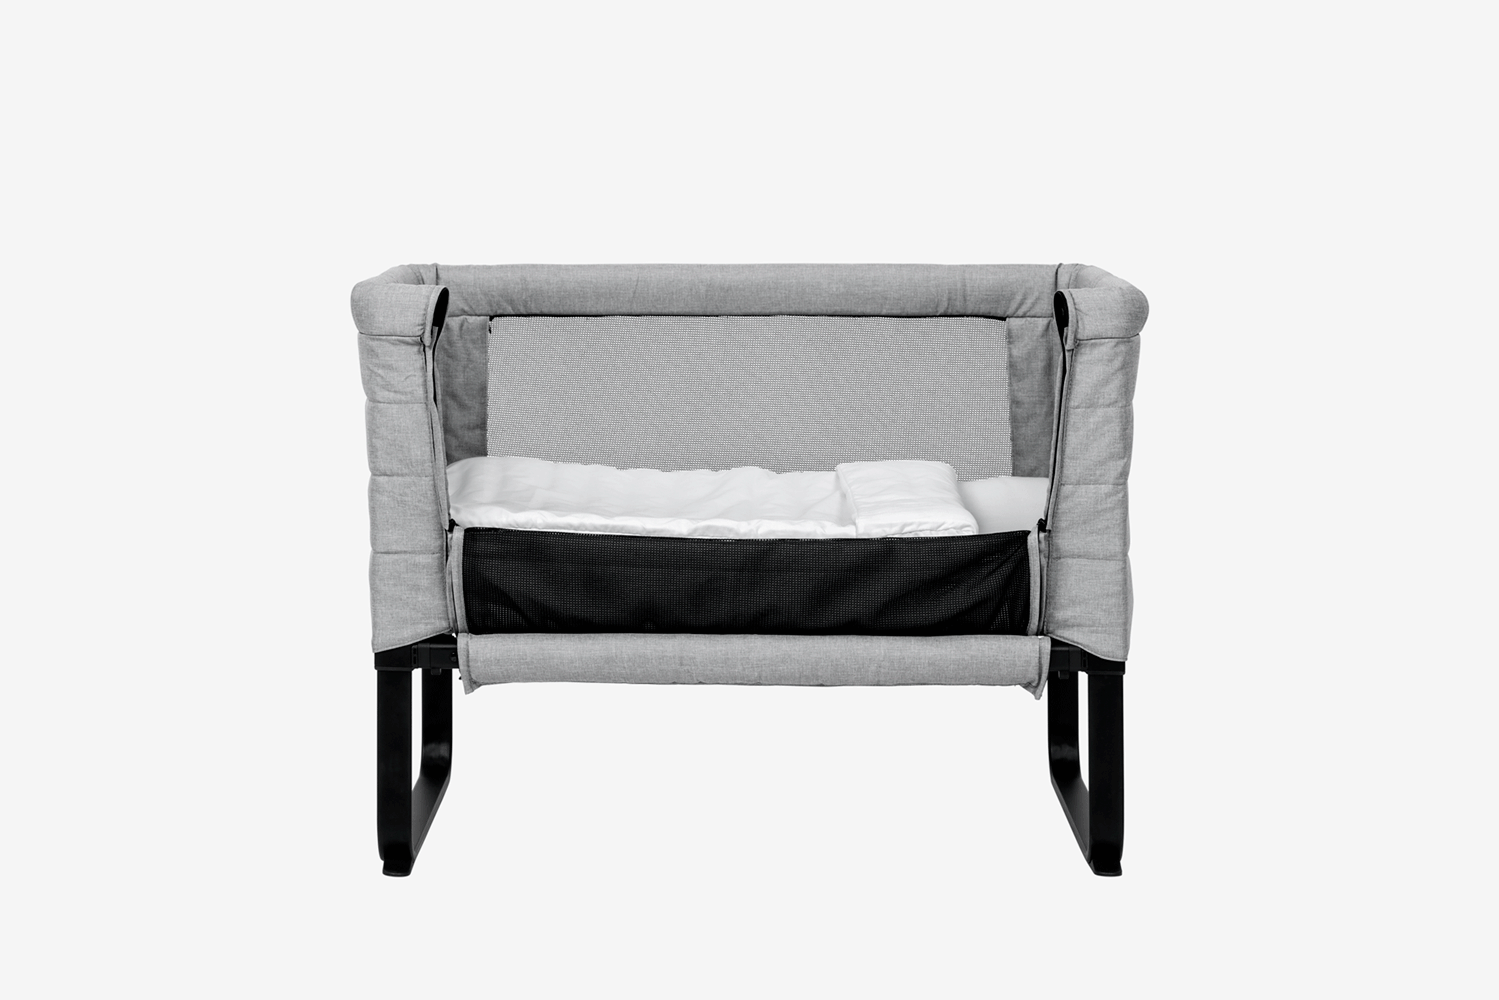 Bedside Cradle - FROM